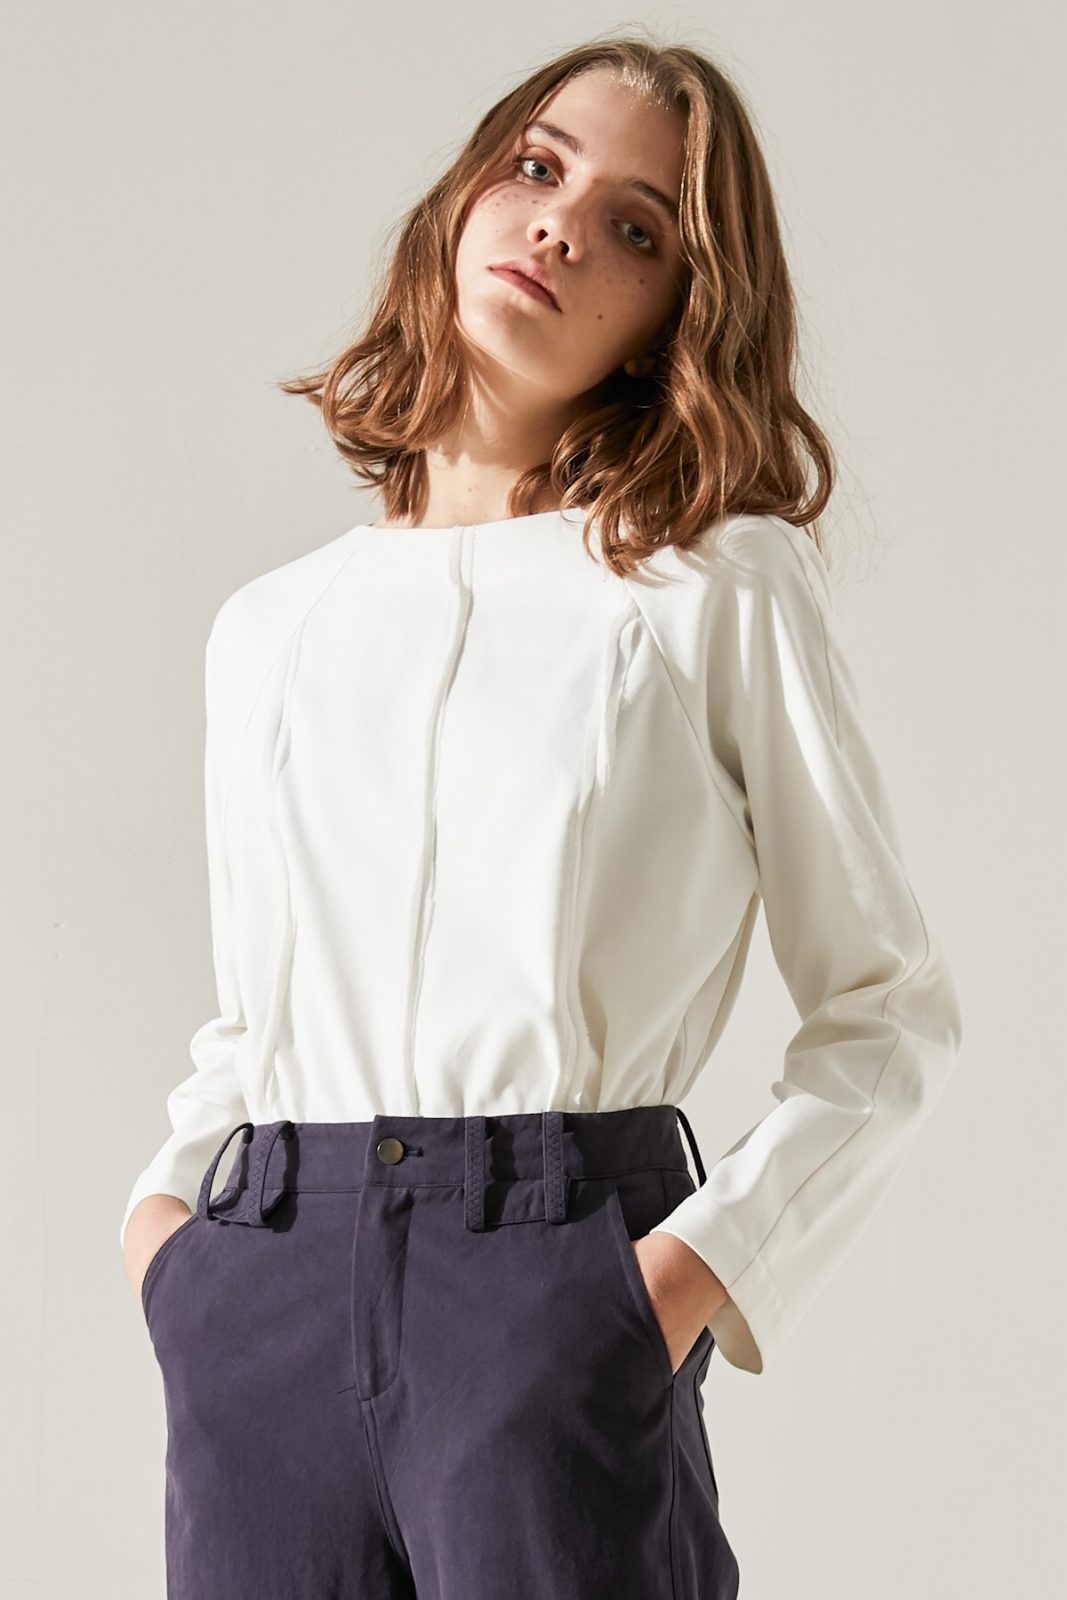 SKYE minimalist women clothing fashion Kate Chiffon Blouse Top white 2